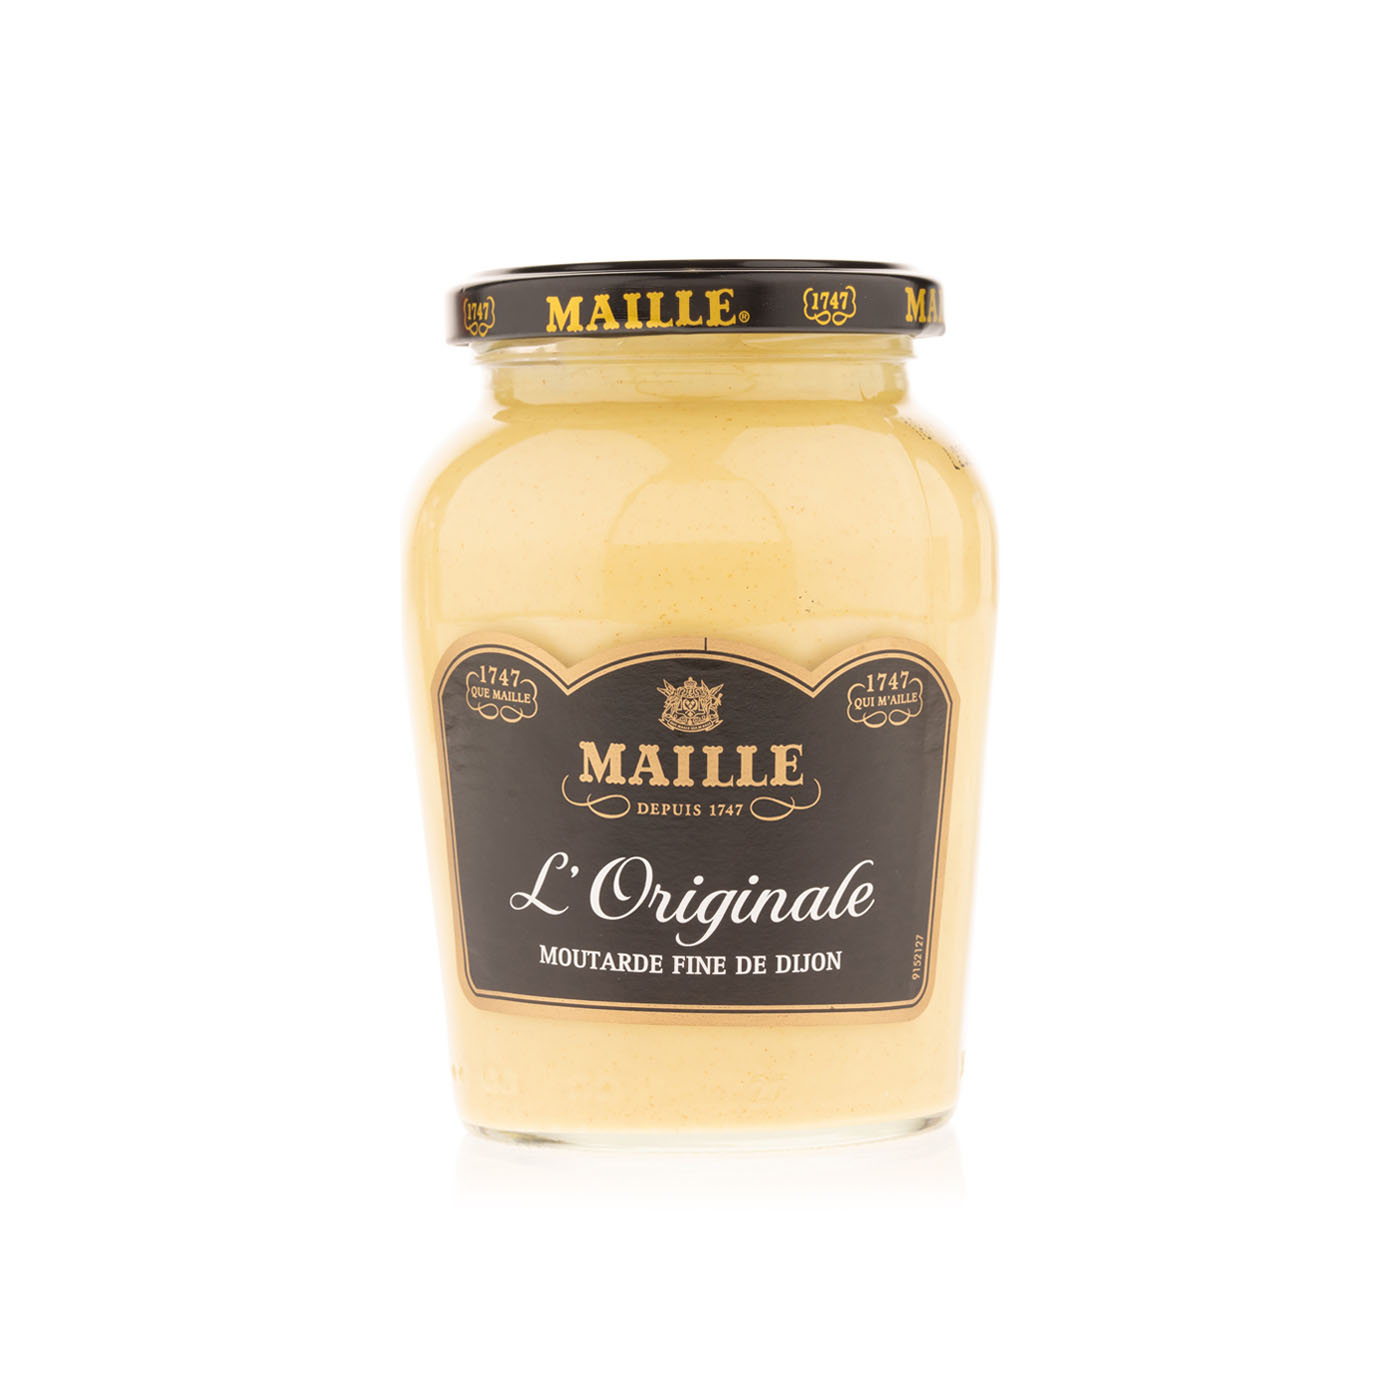 Maille dijon original mustard 360g - Spinneys UAE